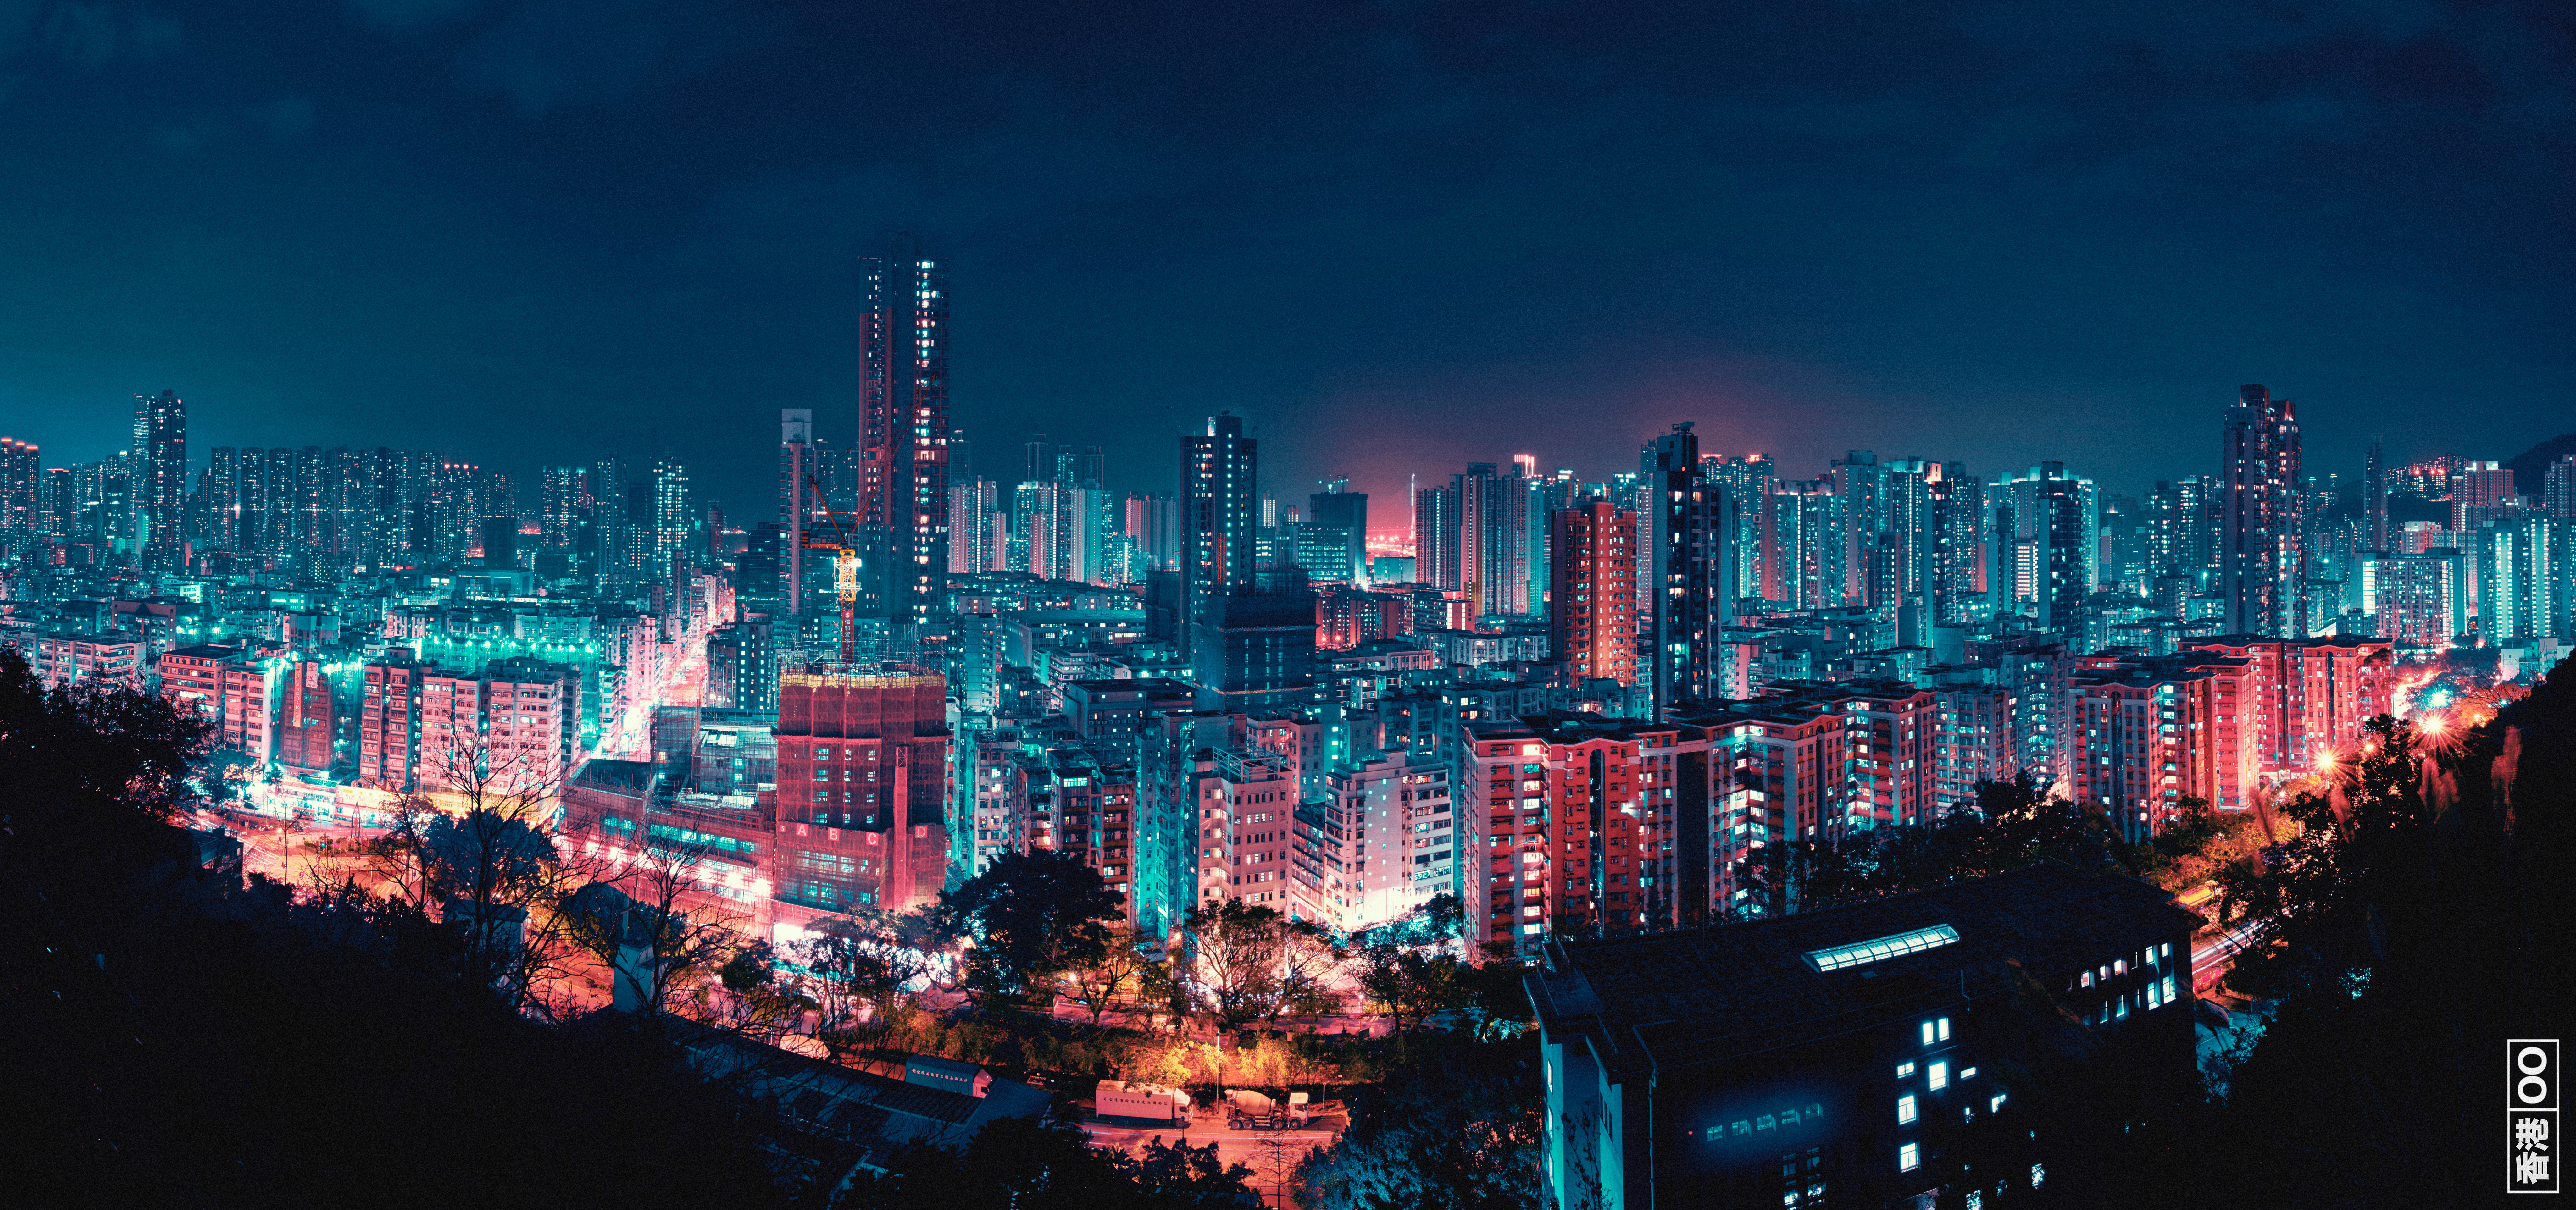 Wide Screen City City Lights Cityscape Nightscape Neon Night Street Hong Kong Photography Skyscraper 8192x3849